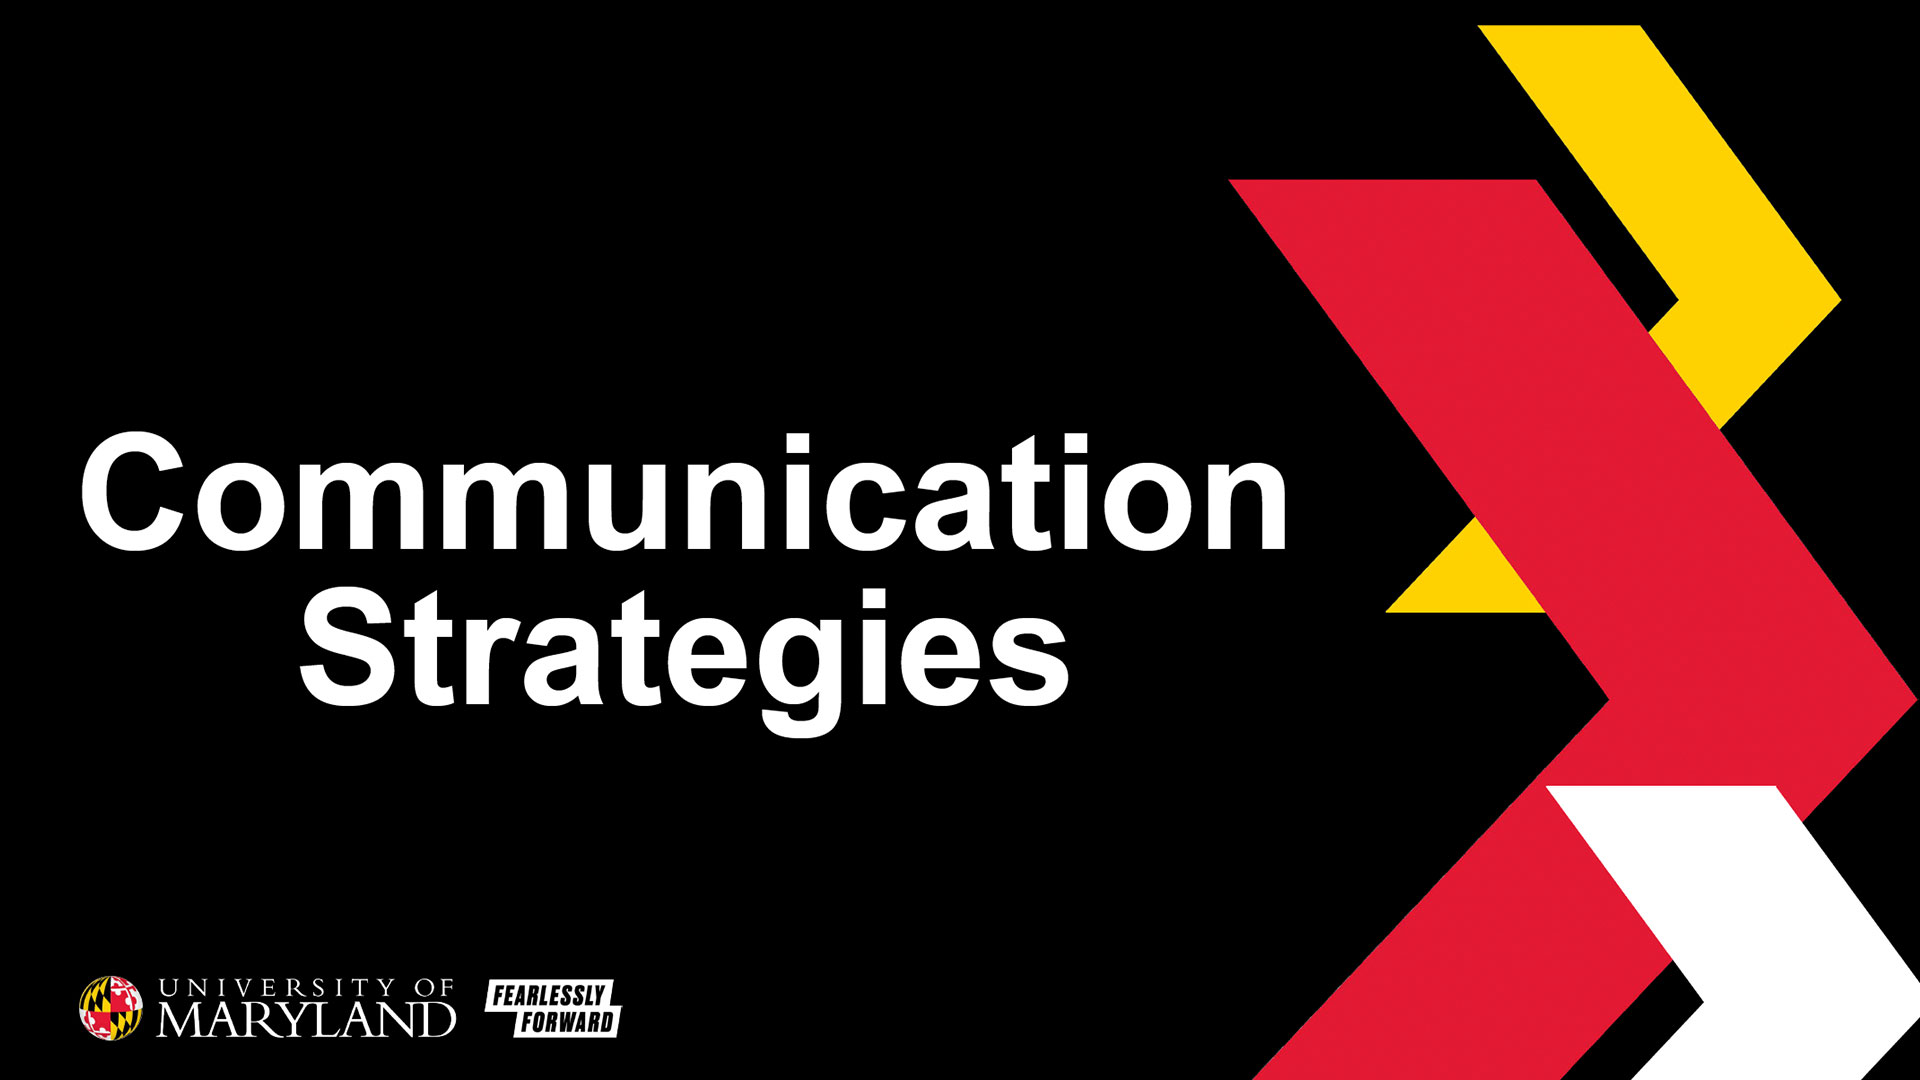 cover slide for communication strategies deck